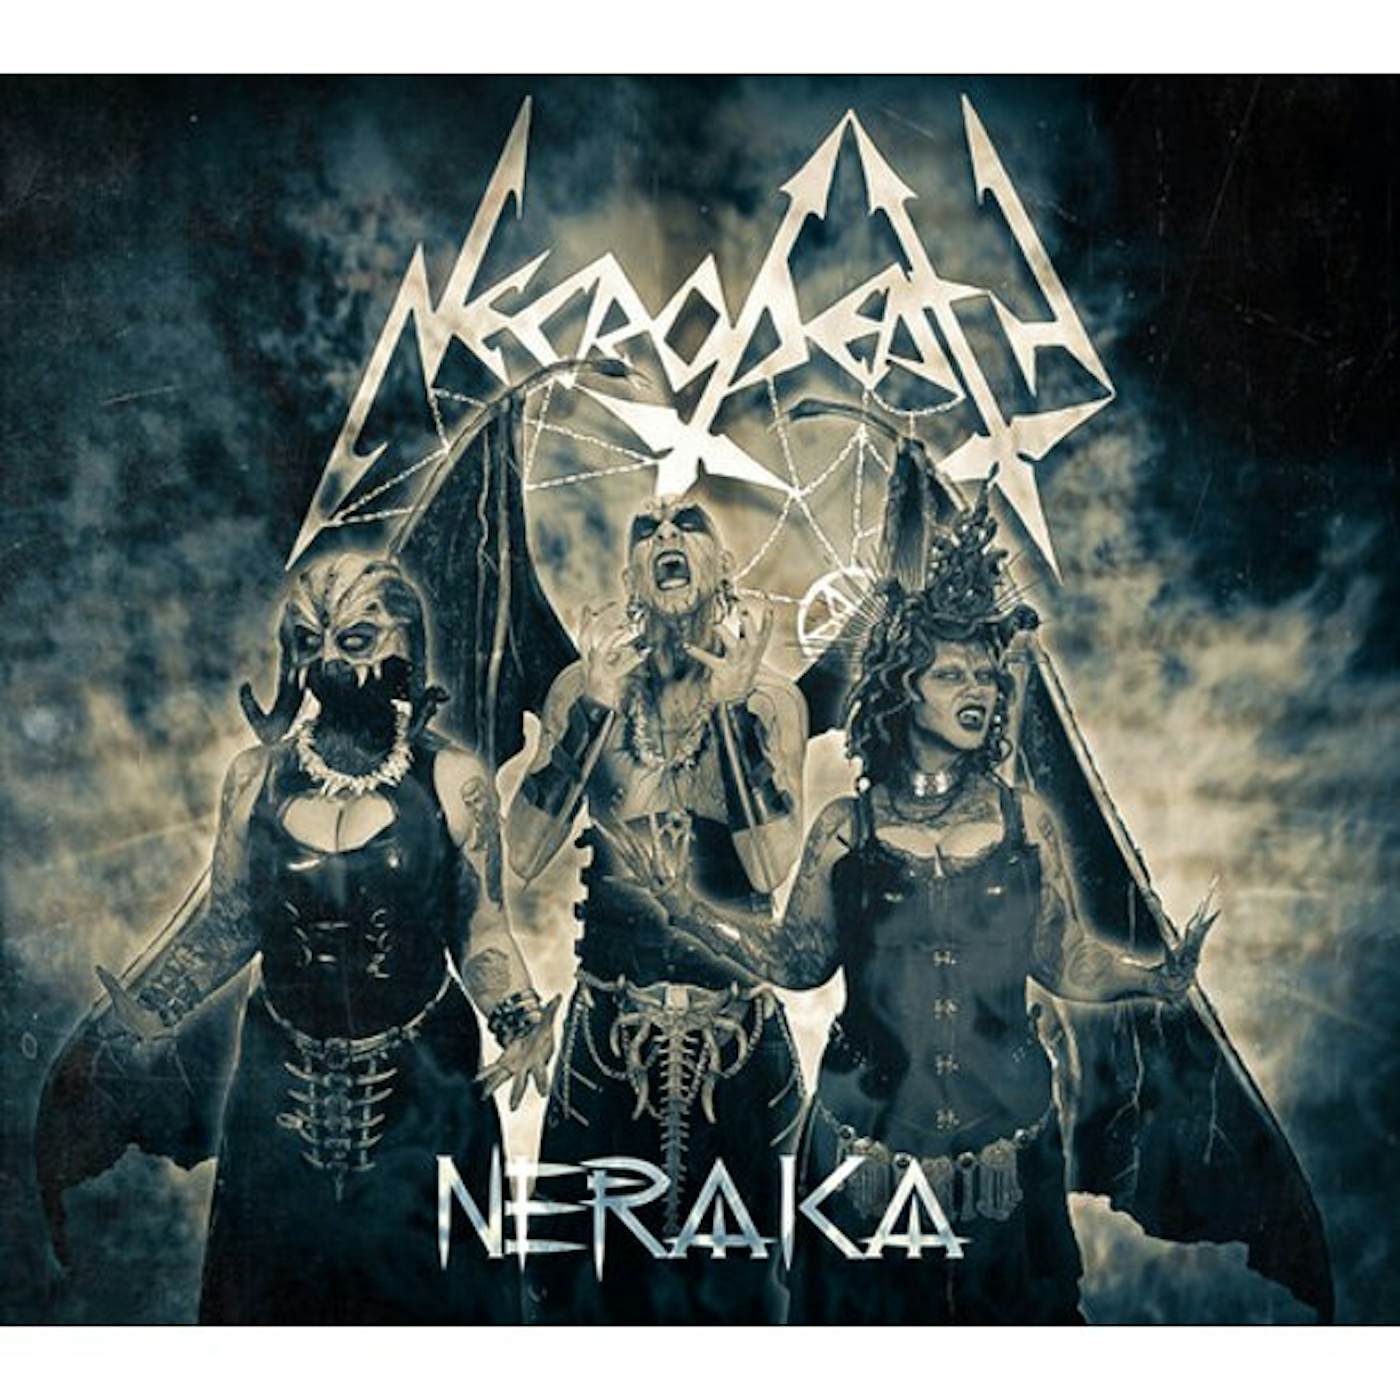 Necrodeath Neraka Vinyl Record